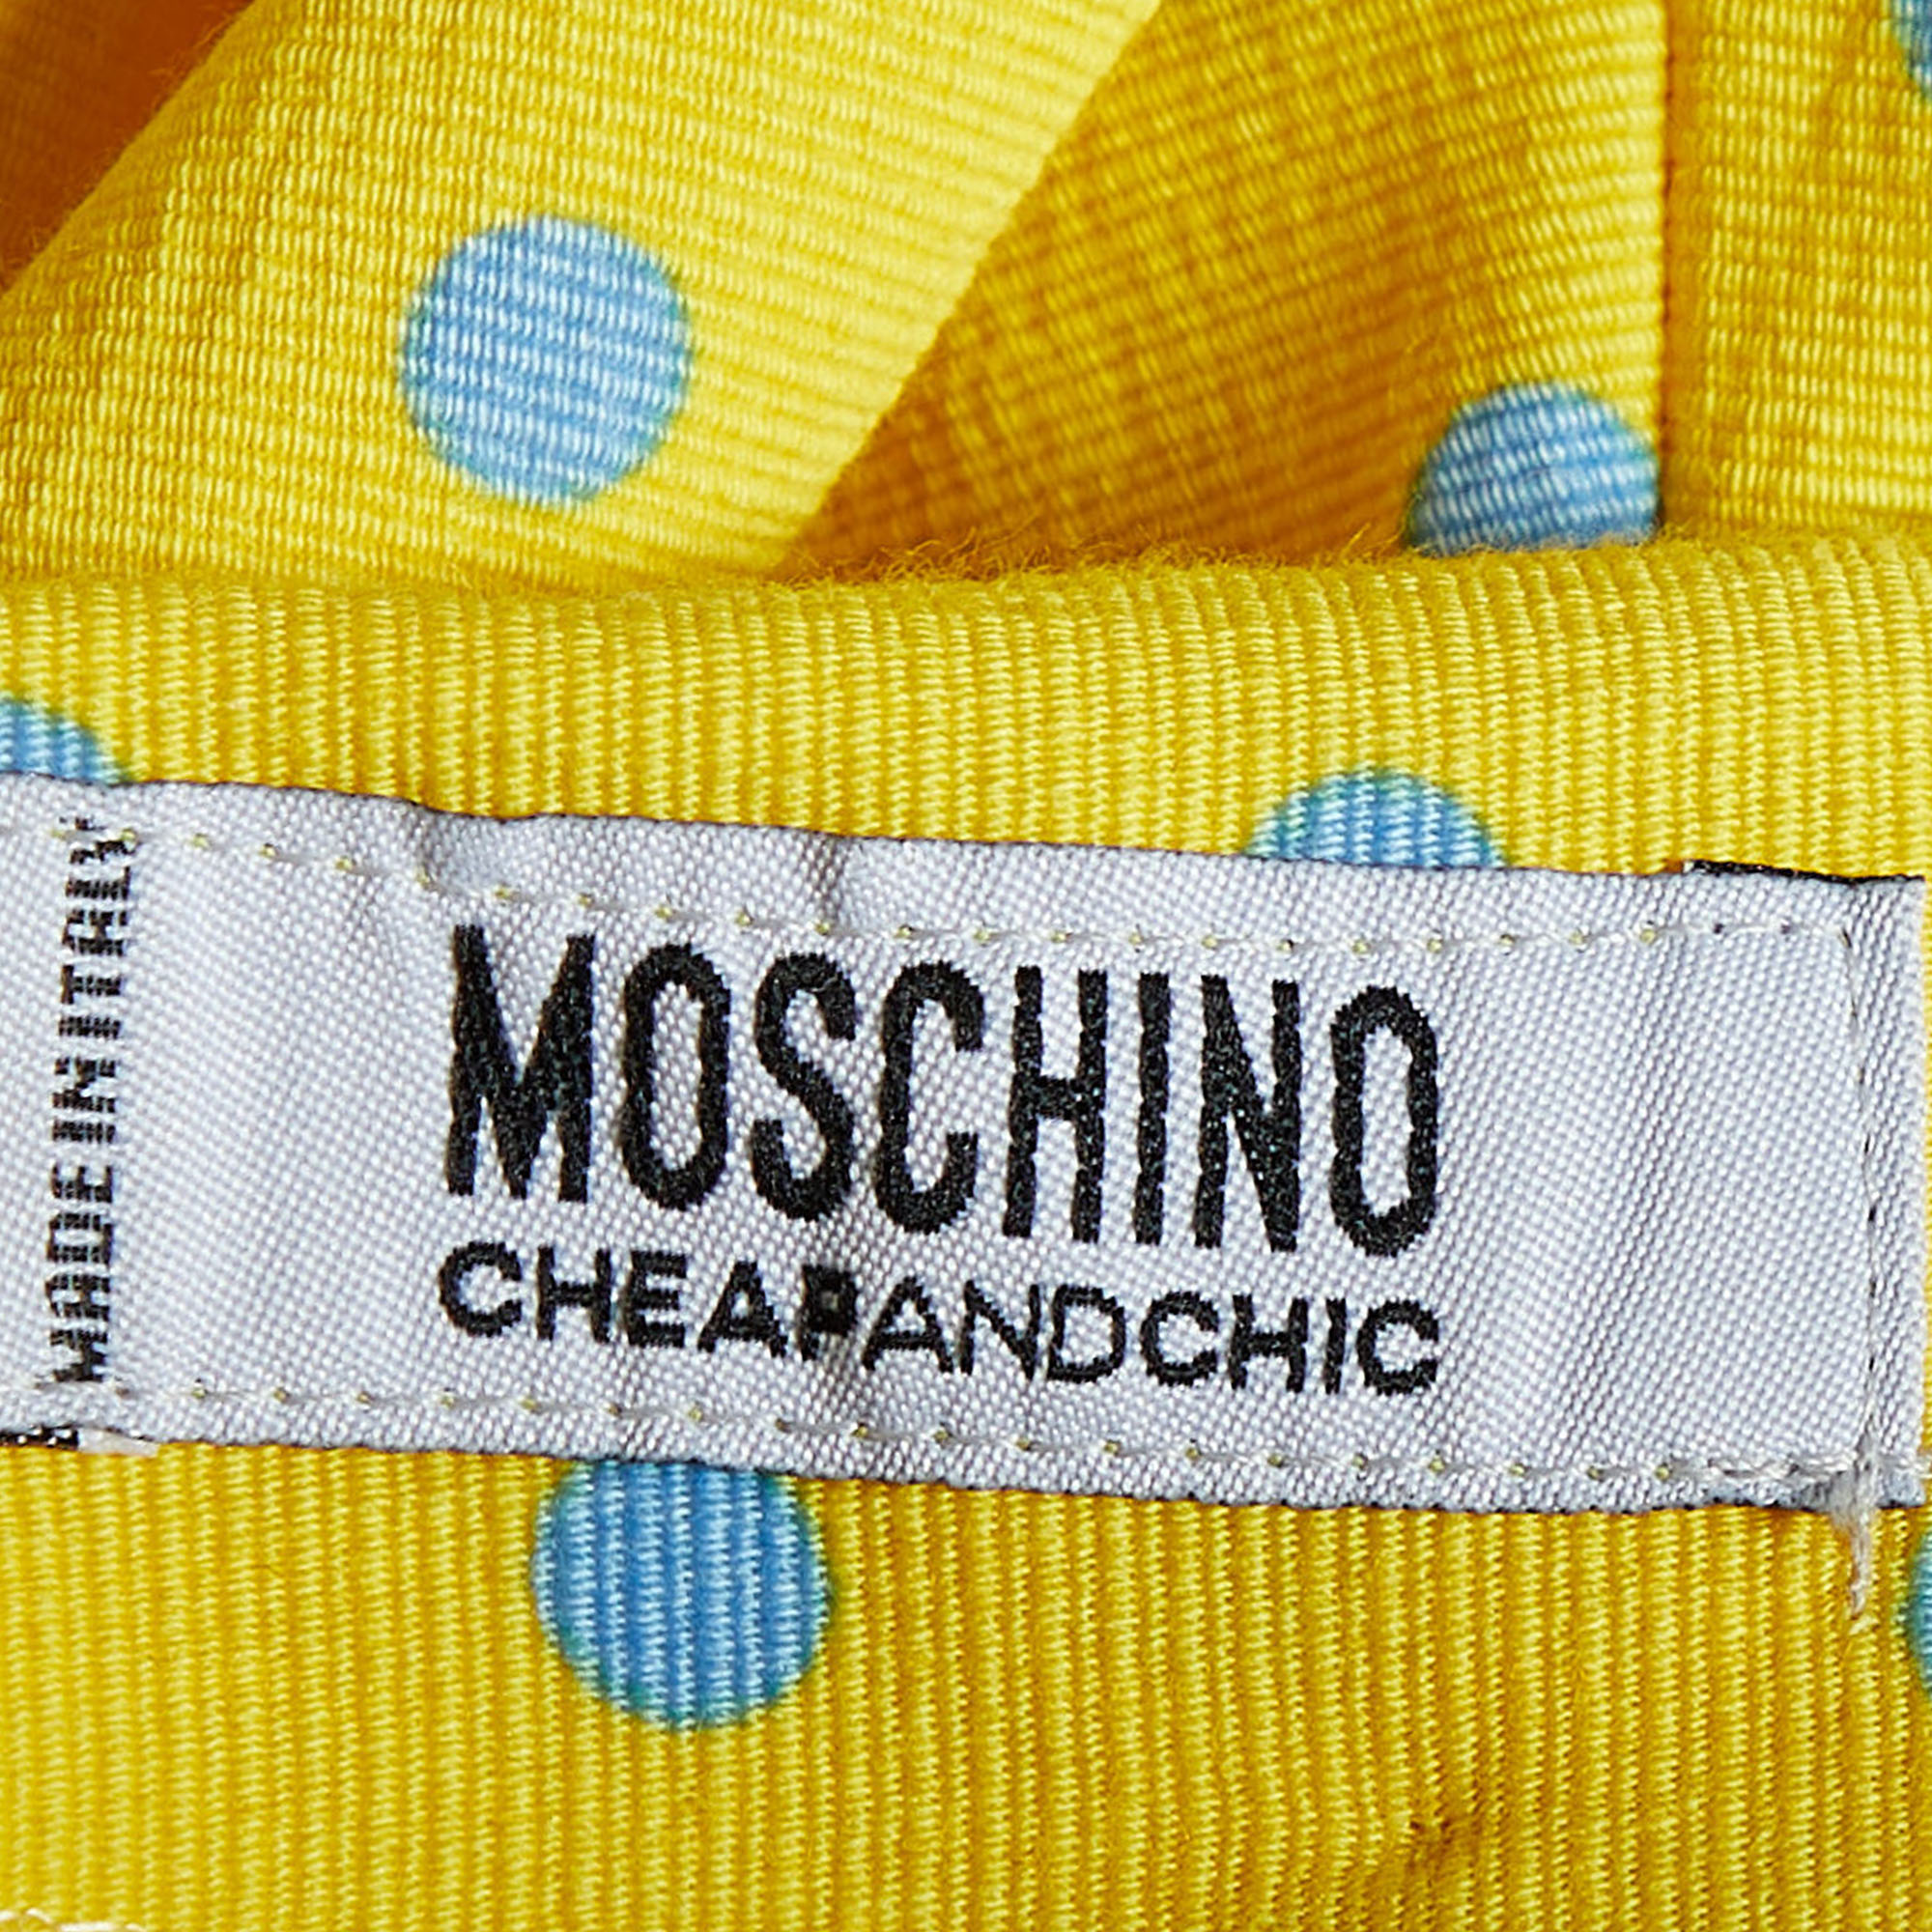 Moschino Cheap And Chic Yellow Polka Dot Printed Pants L